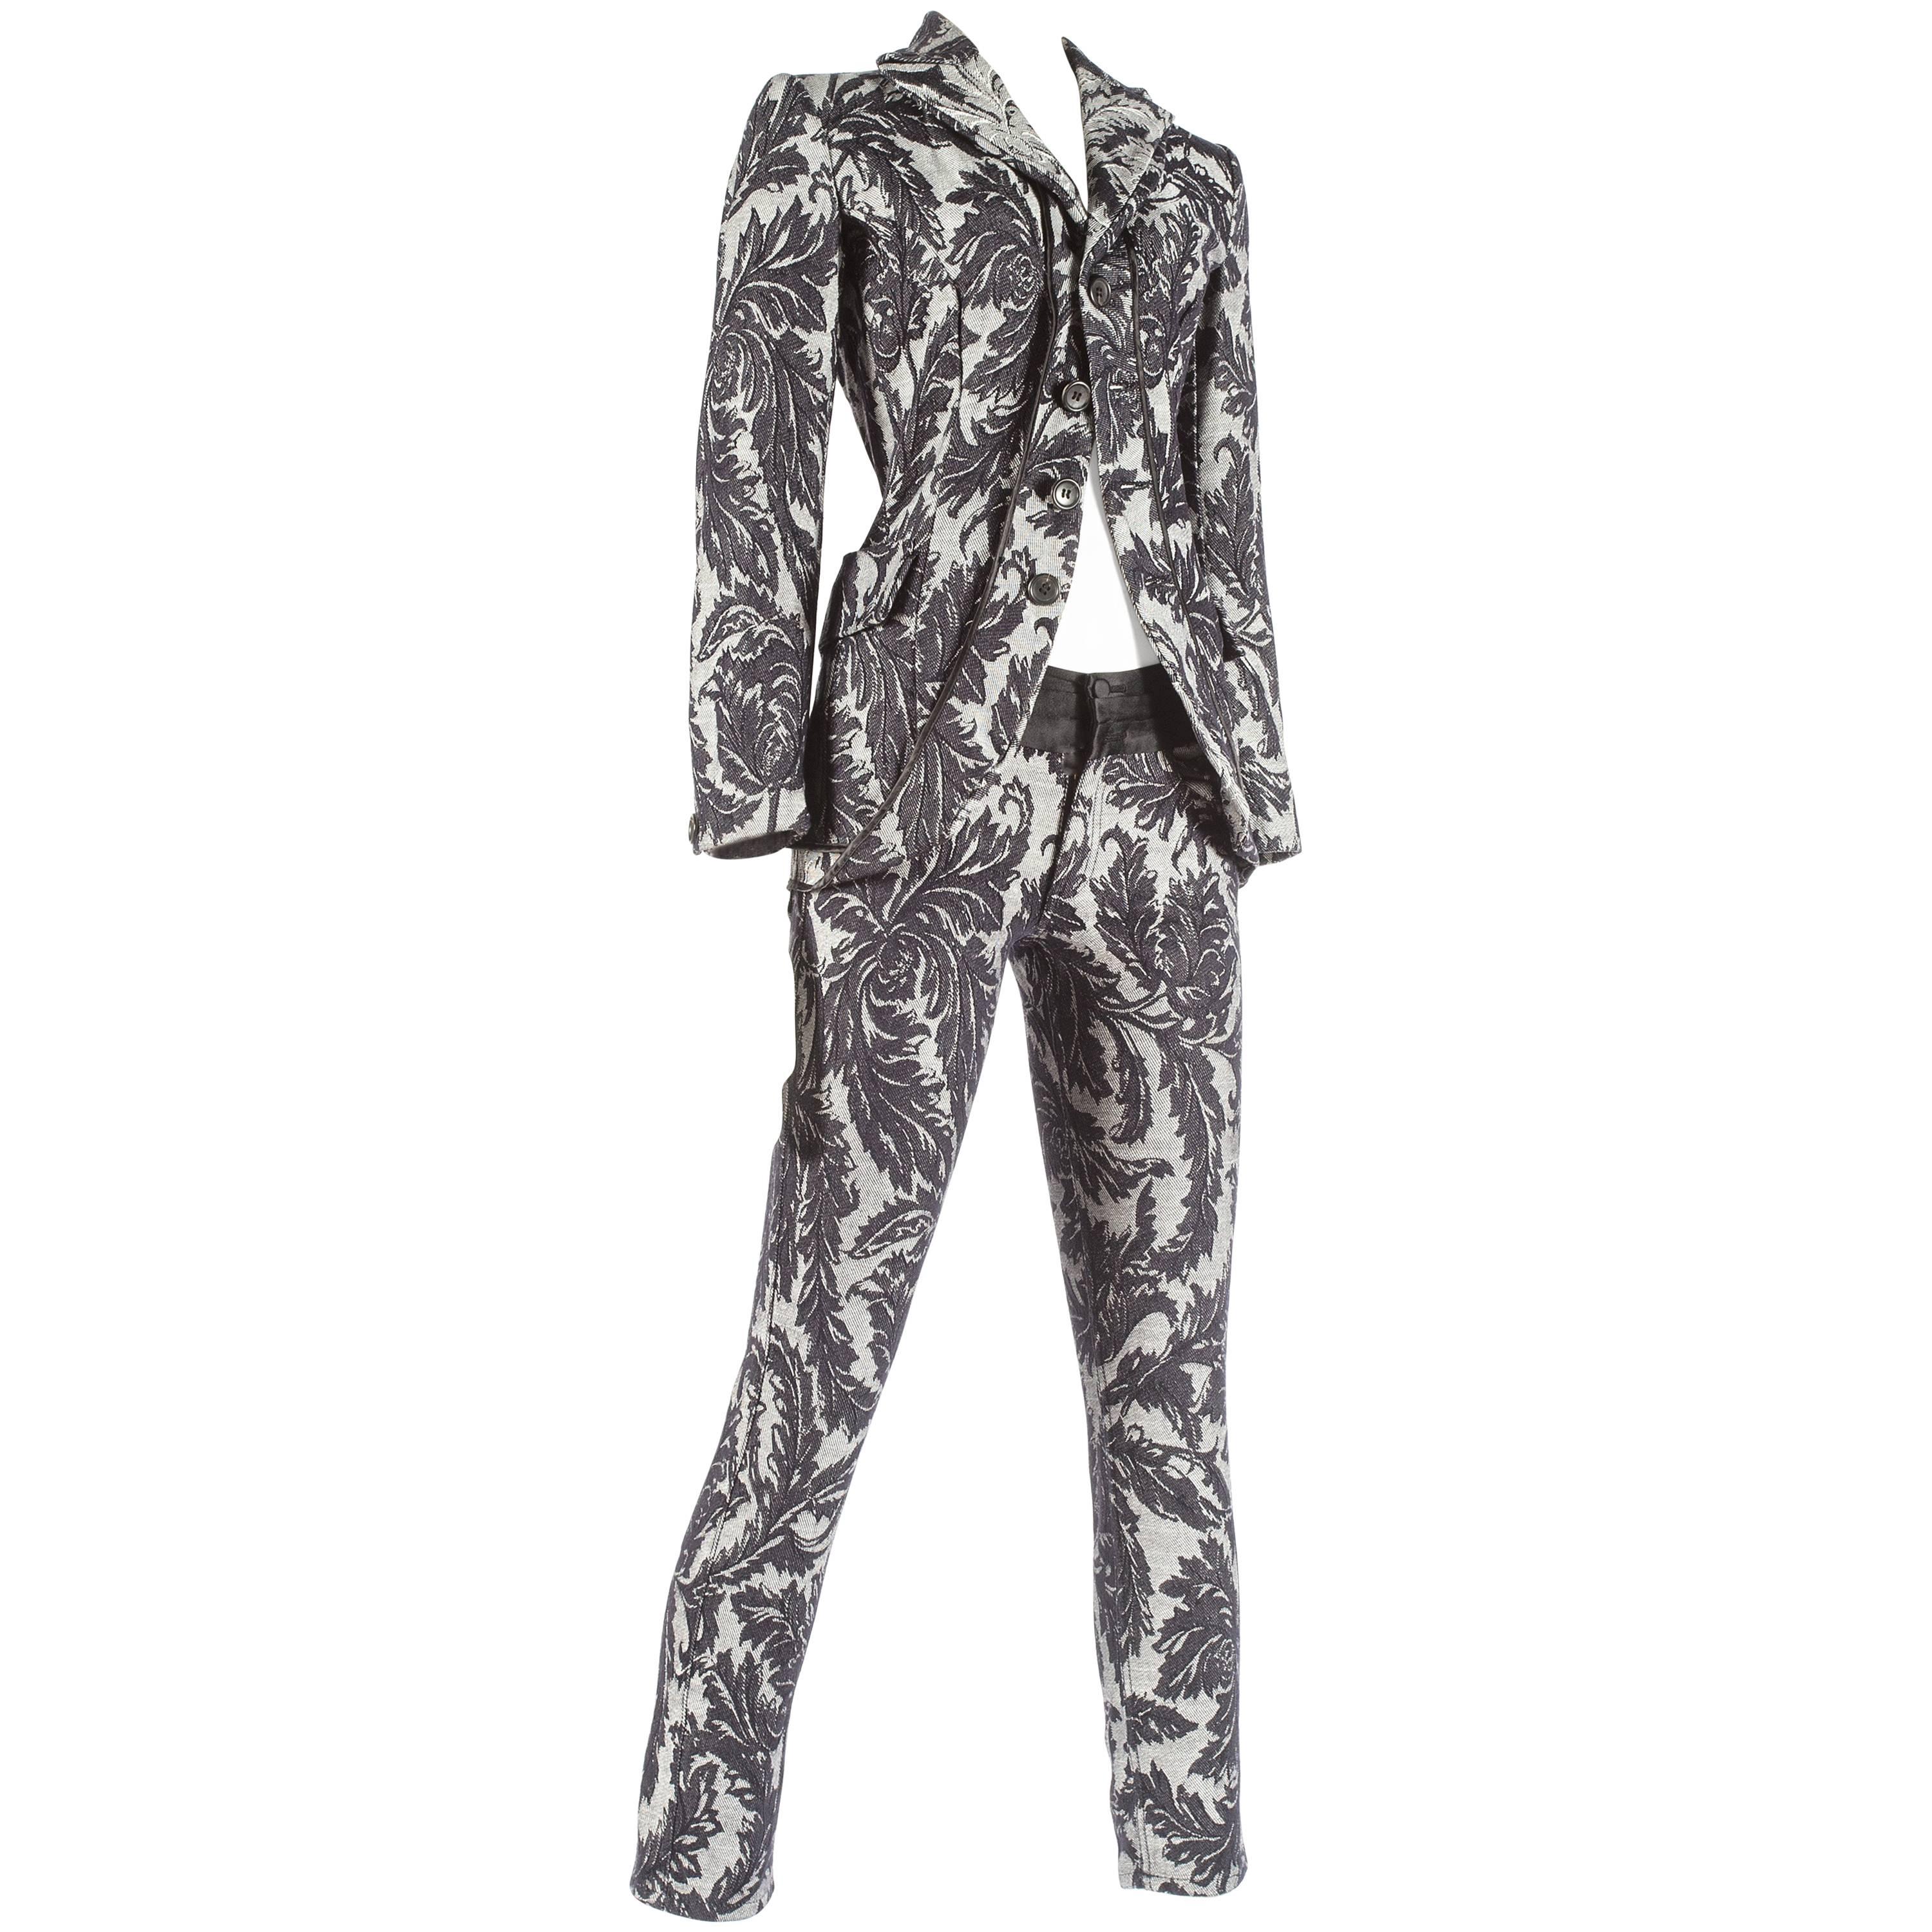 Junya Watanabe Spring-Summer 2007 jacquard denim tailored skinny pant suit